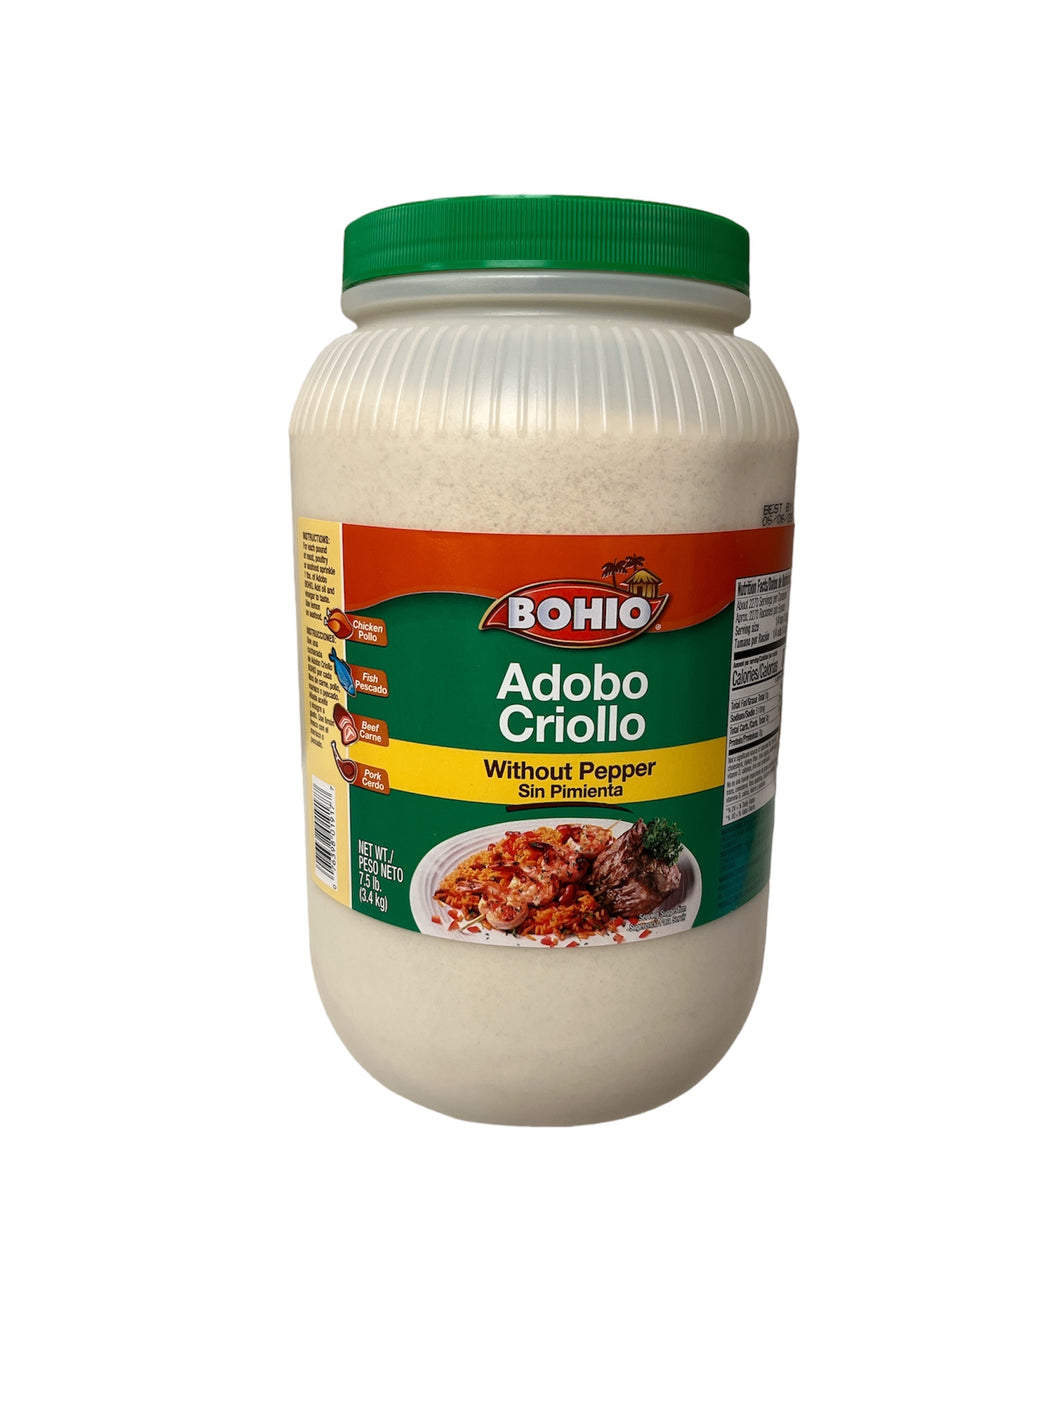 Bohio Seasoning WITHOUT Pepper - Adobo Criollo SIN Pimienta - 7.5 Lbs